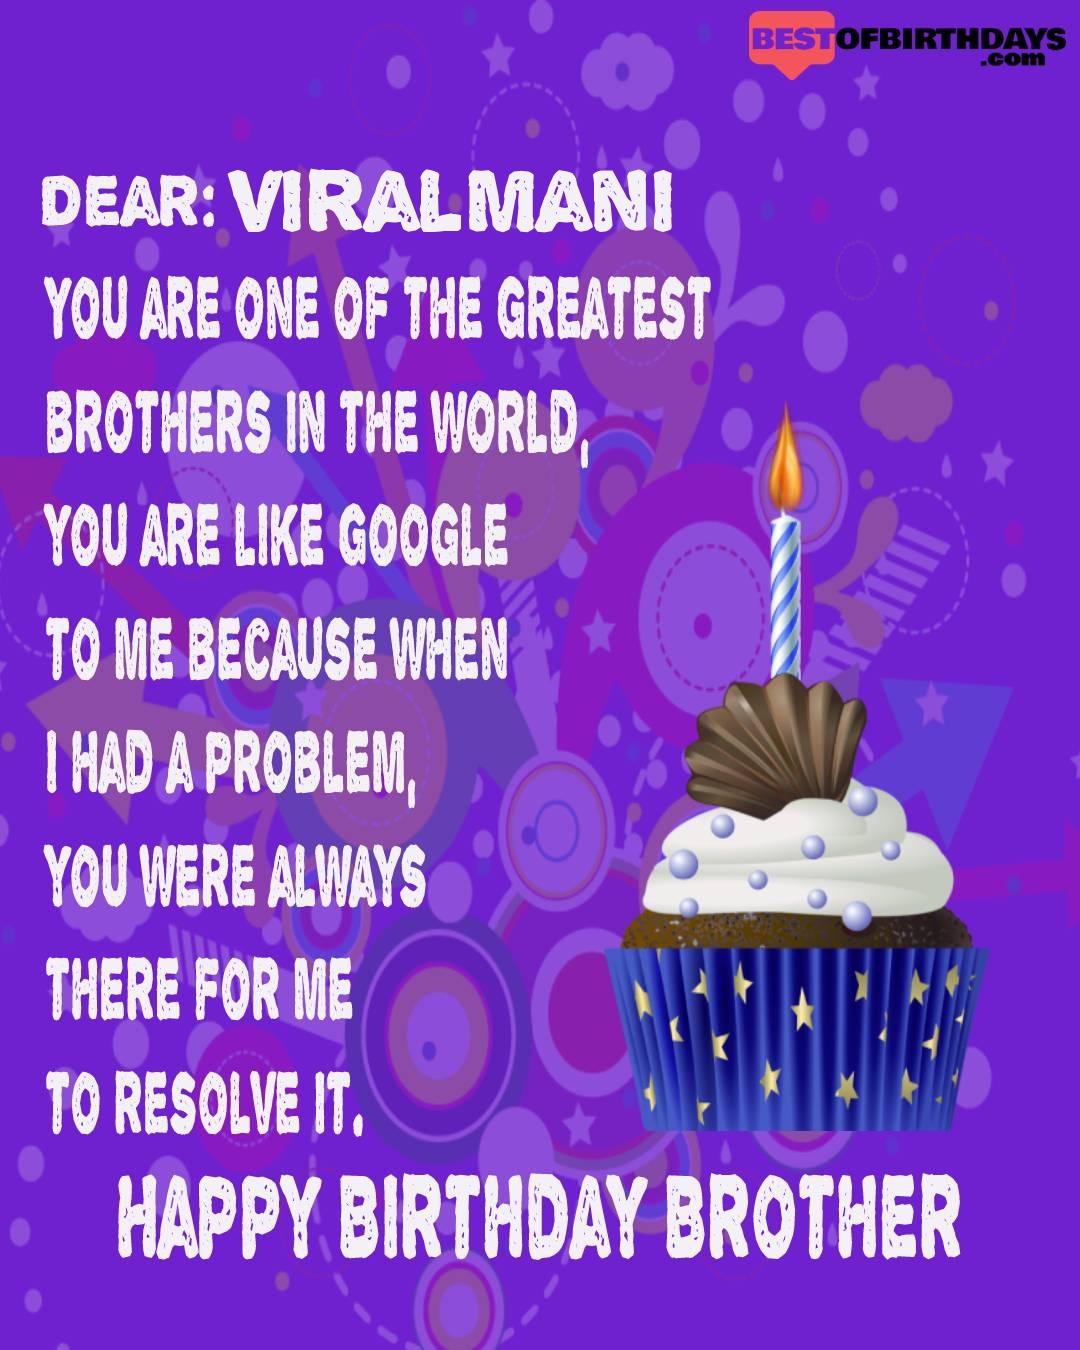 Happy birthday viralmani bhai brother bro